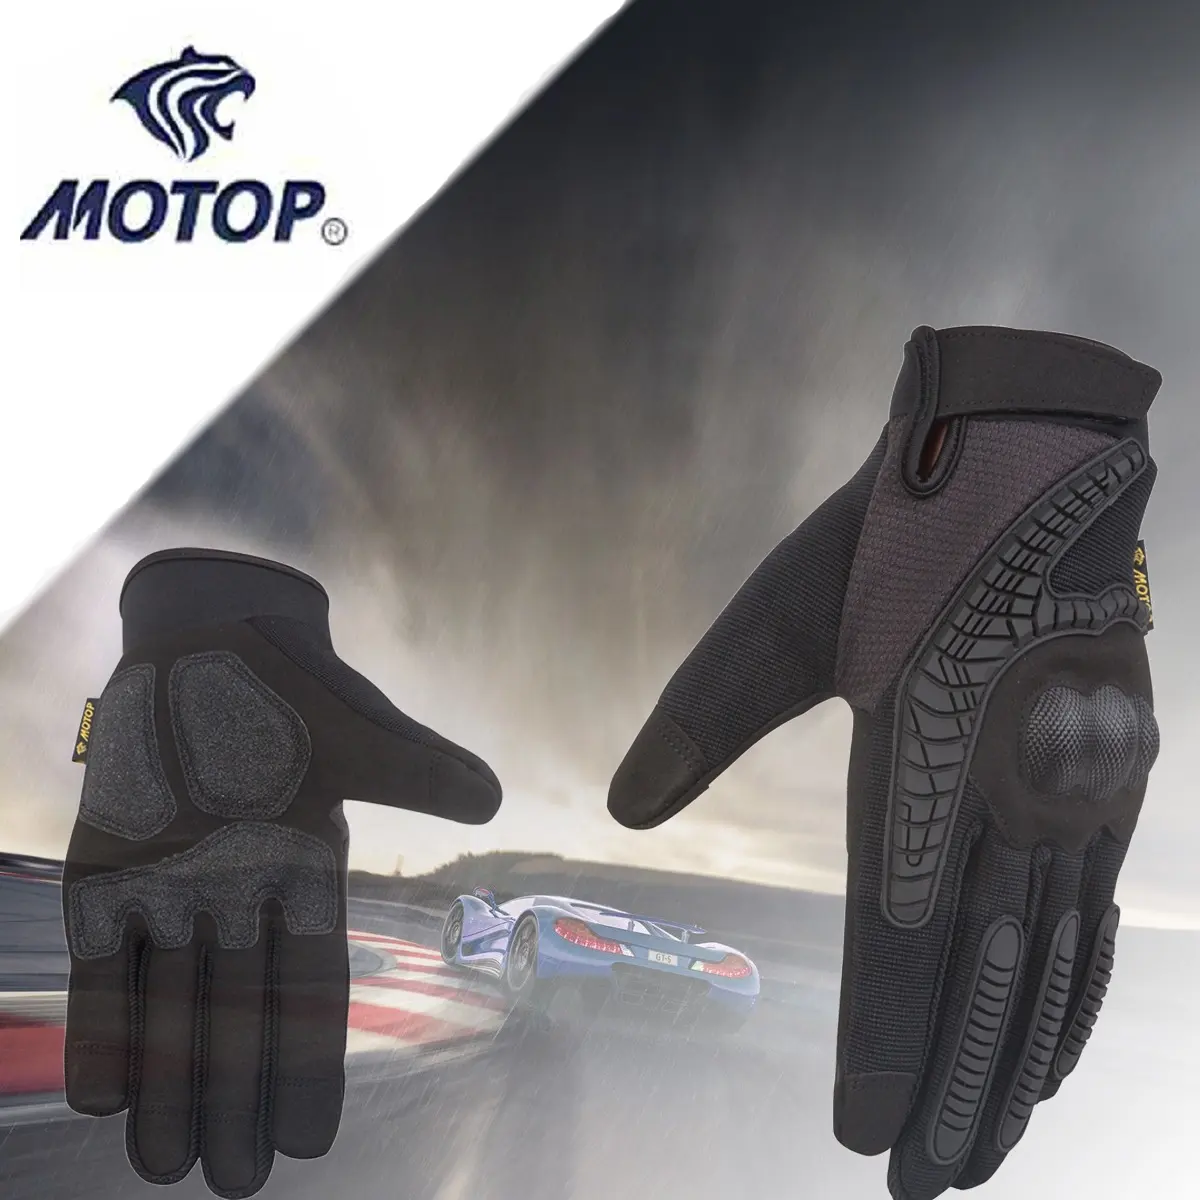 Glove Racing Black Knuckle Protected Sports Motocross Motorcycle Racing Glove